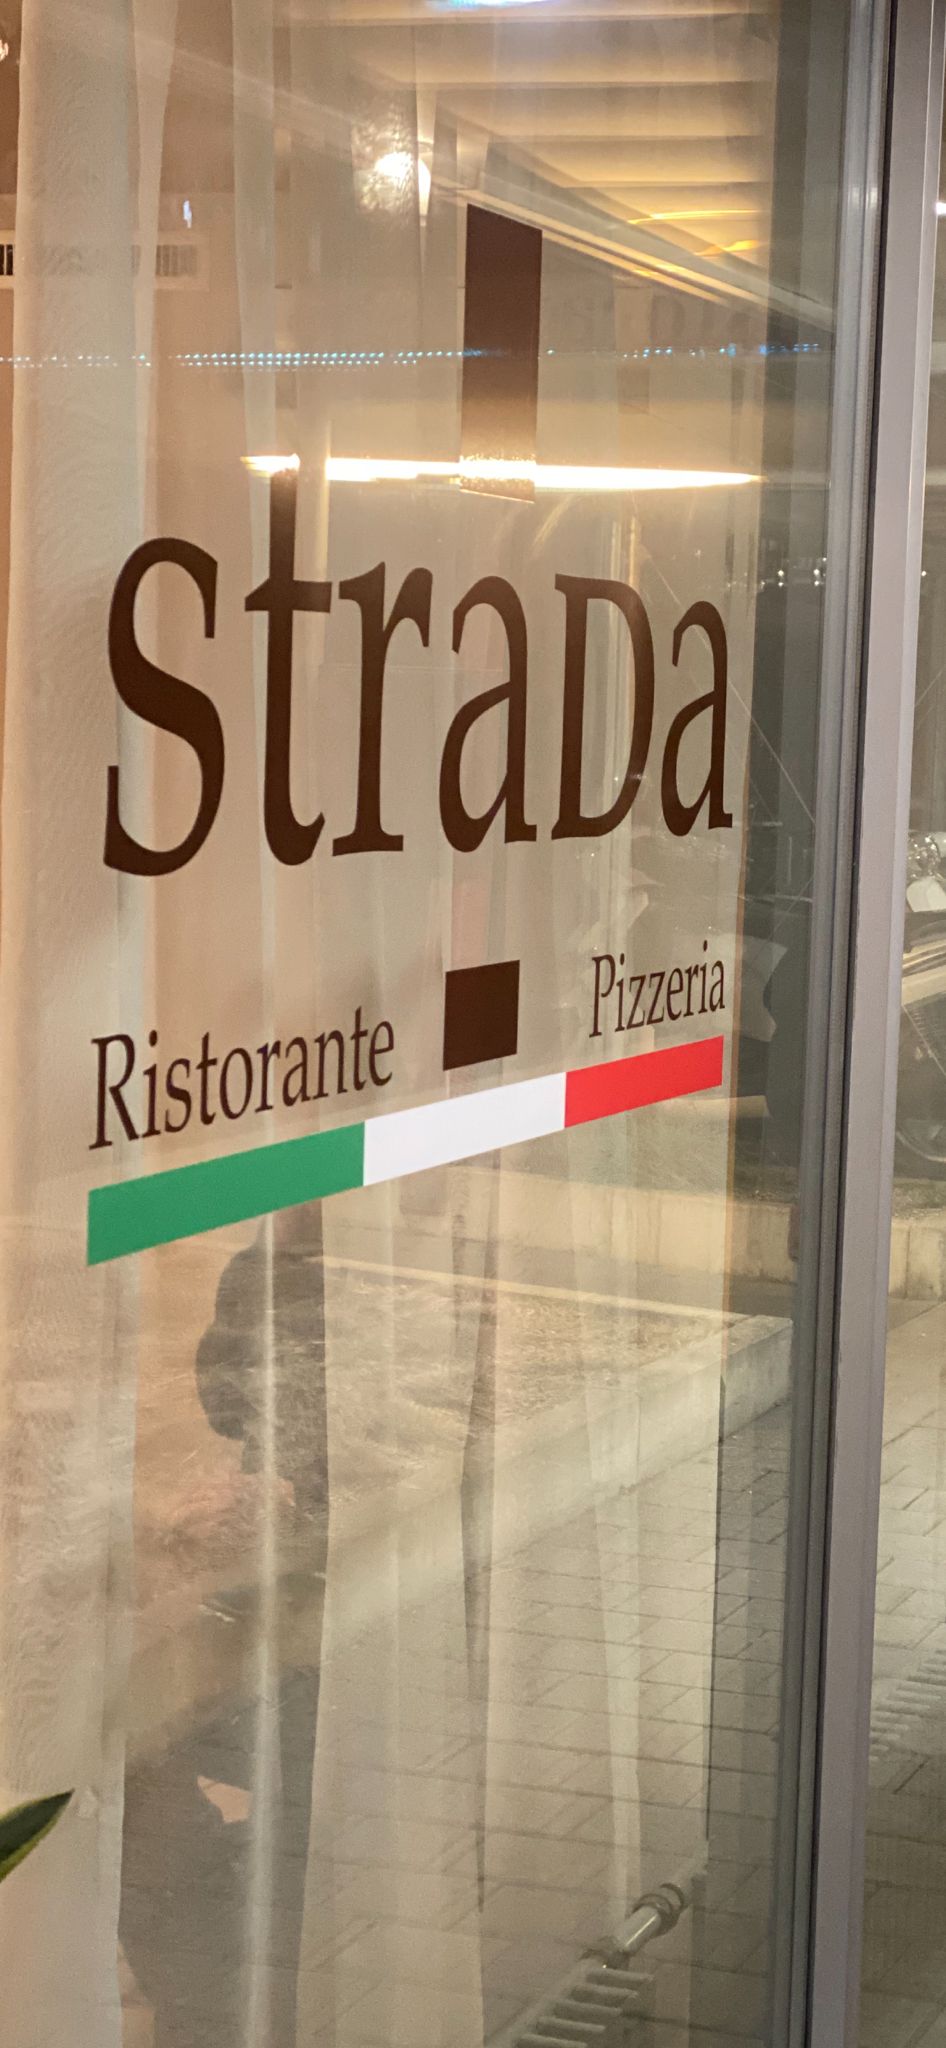 Strada Ristorante straDa Pizzeria Bern 031 352 94 24